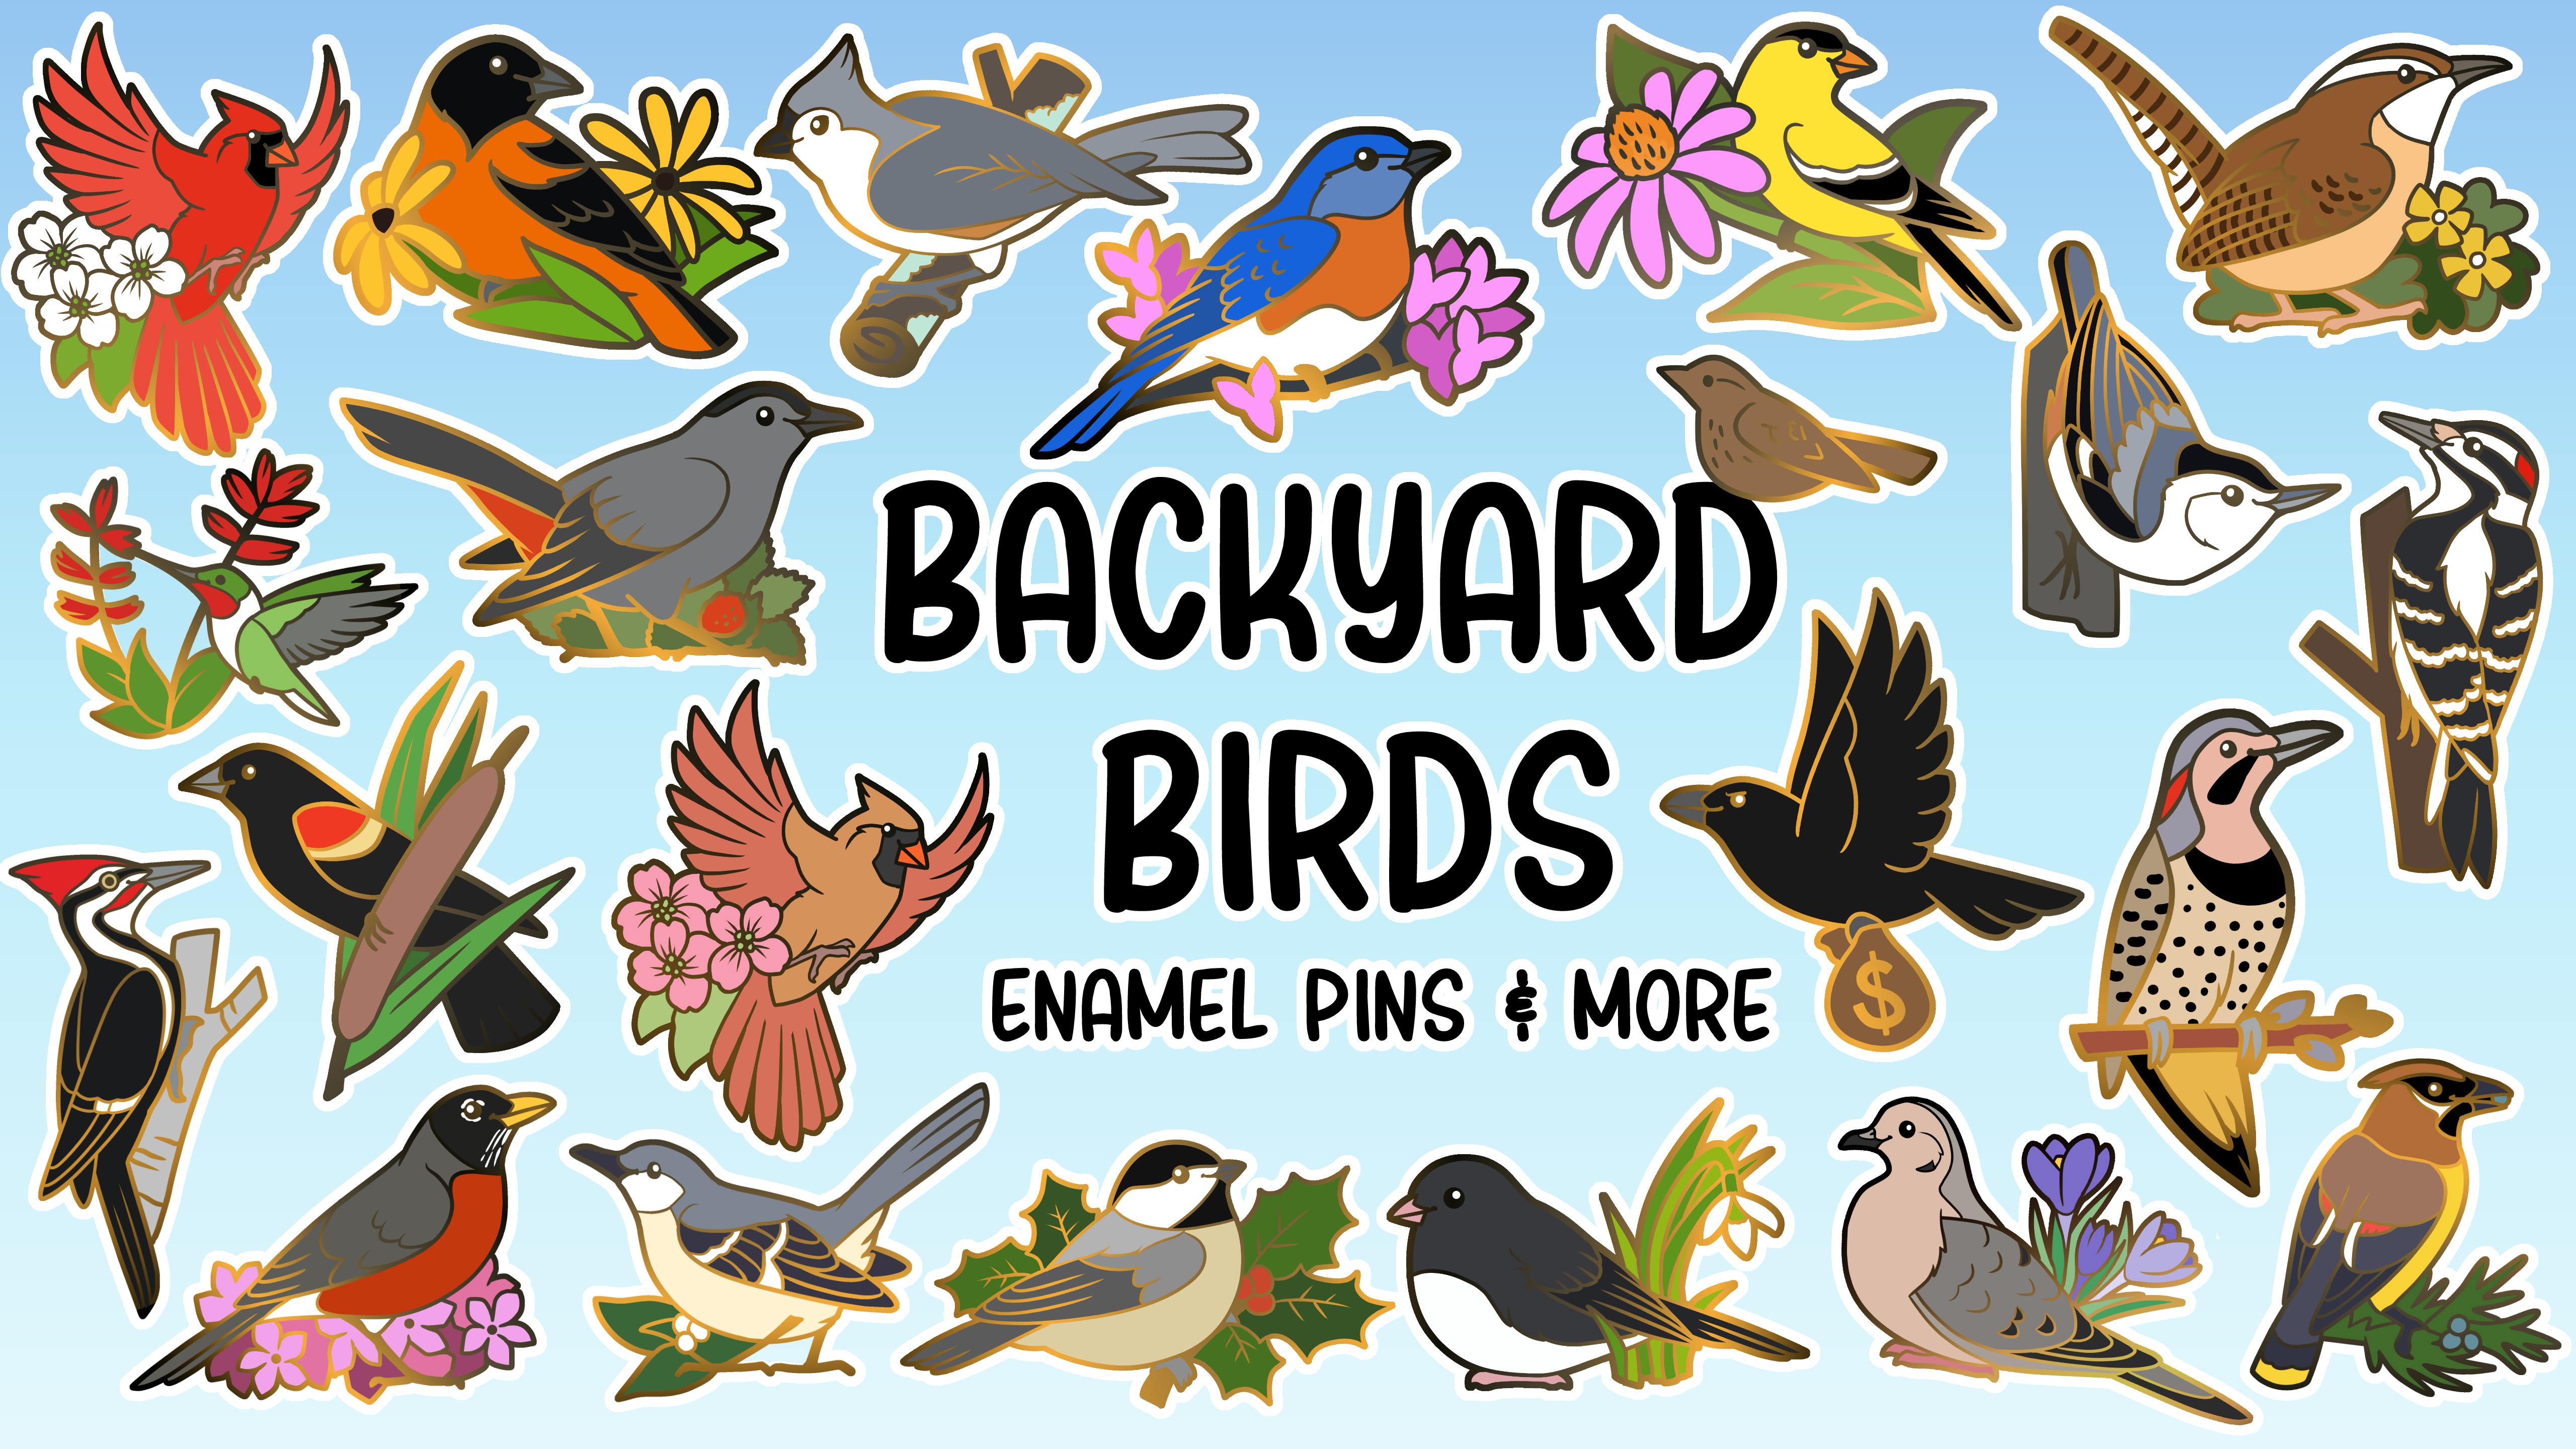 Backyard Birds: Pins & More!